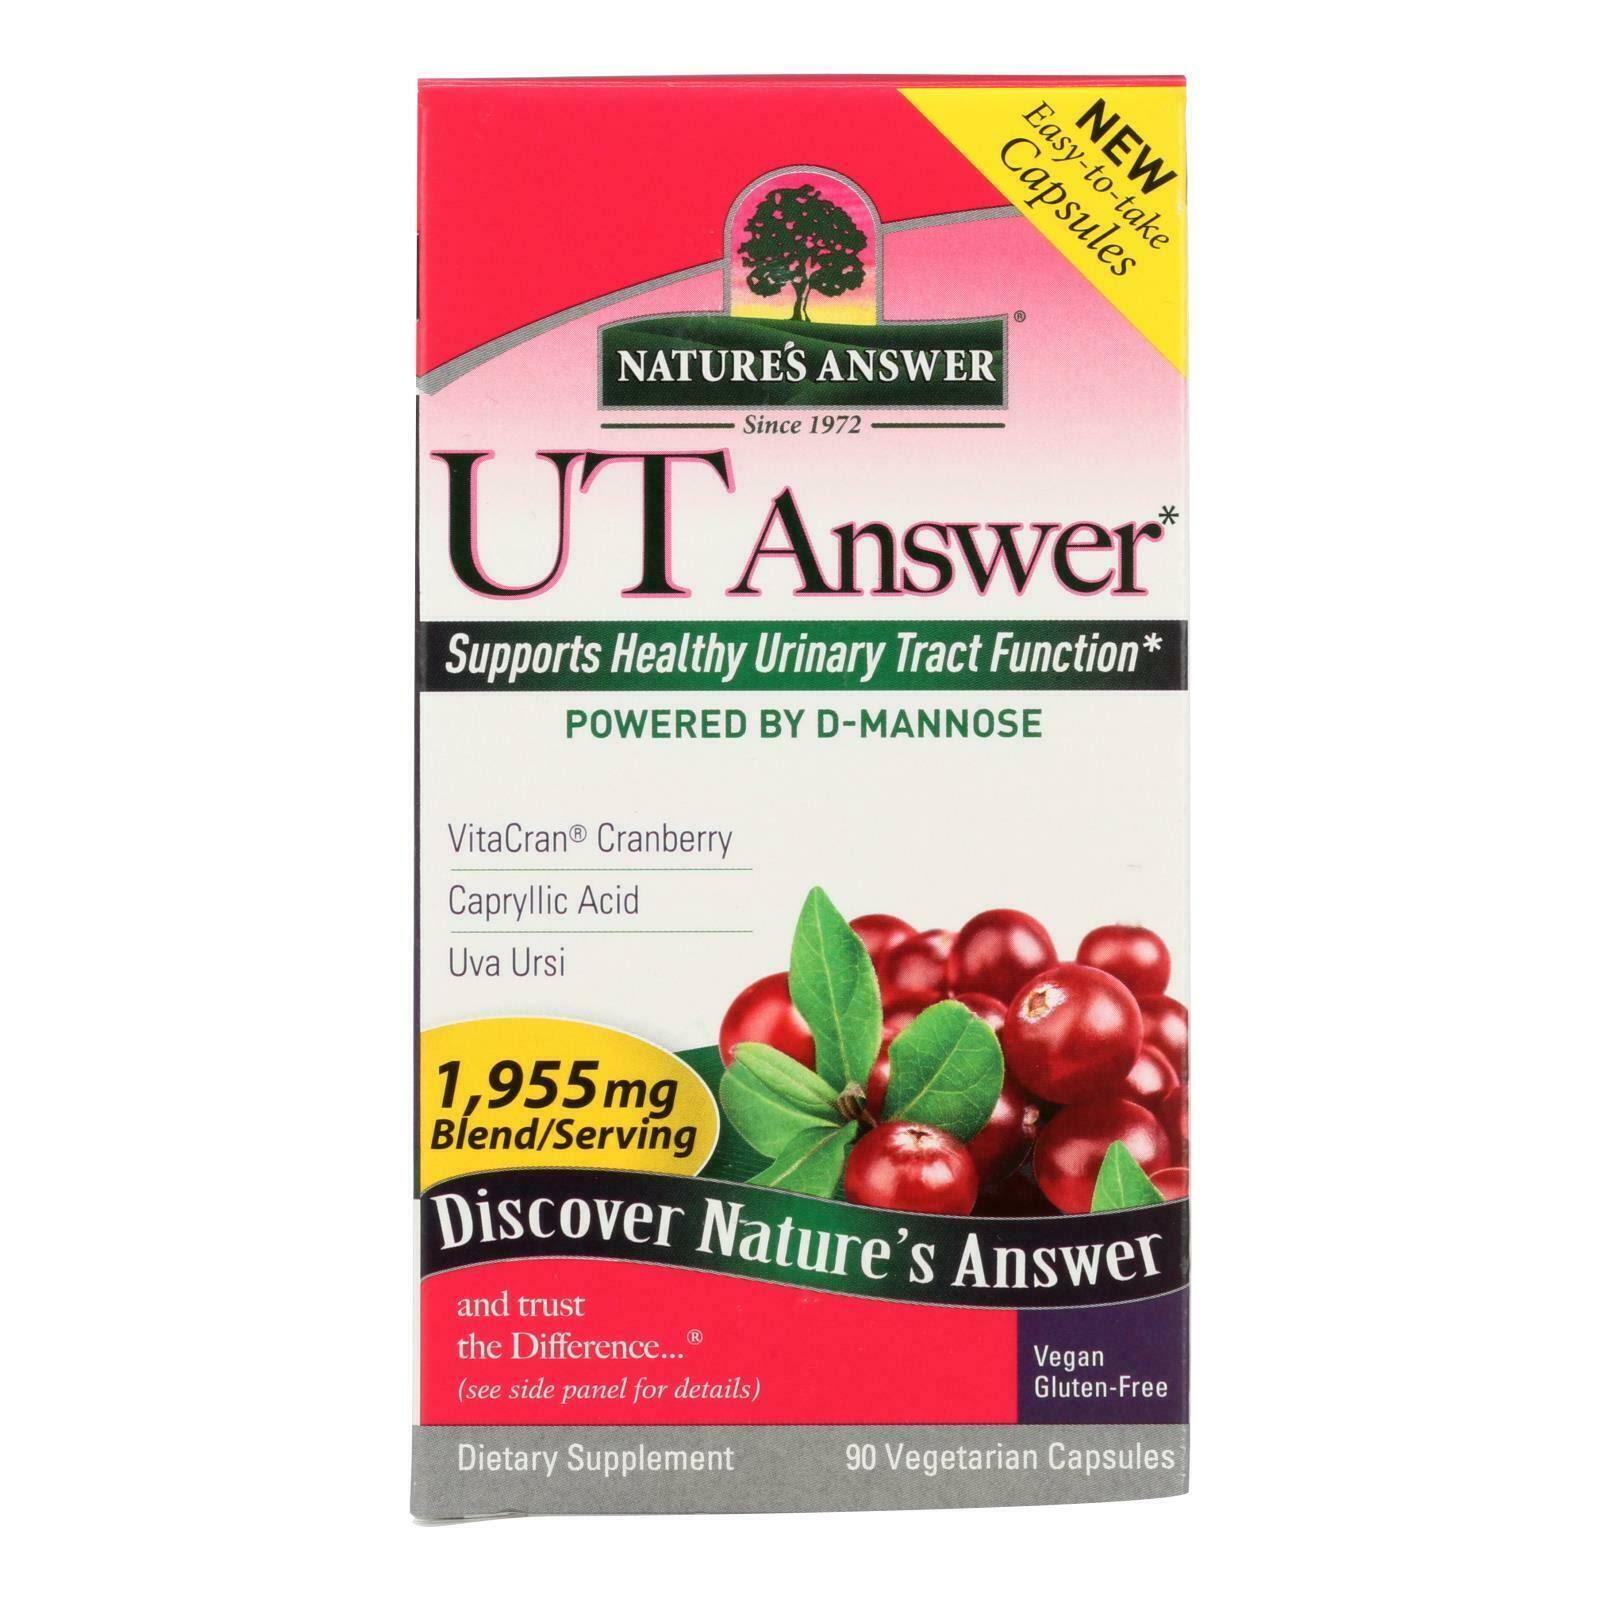 Nature's Answer, UT Answer, 651.66 mg, 90 Vegetarian Capsules